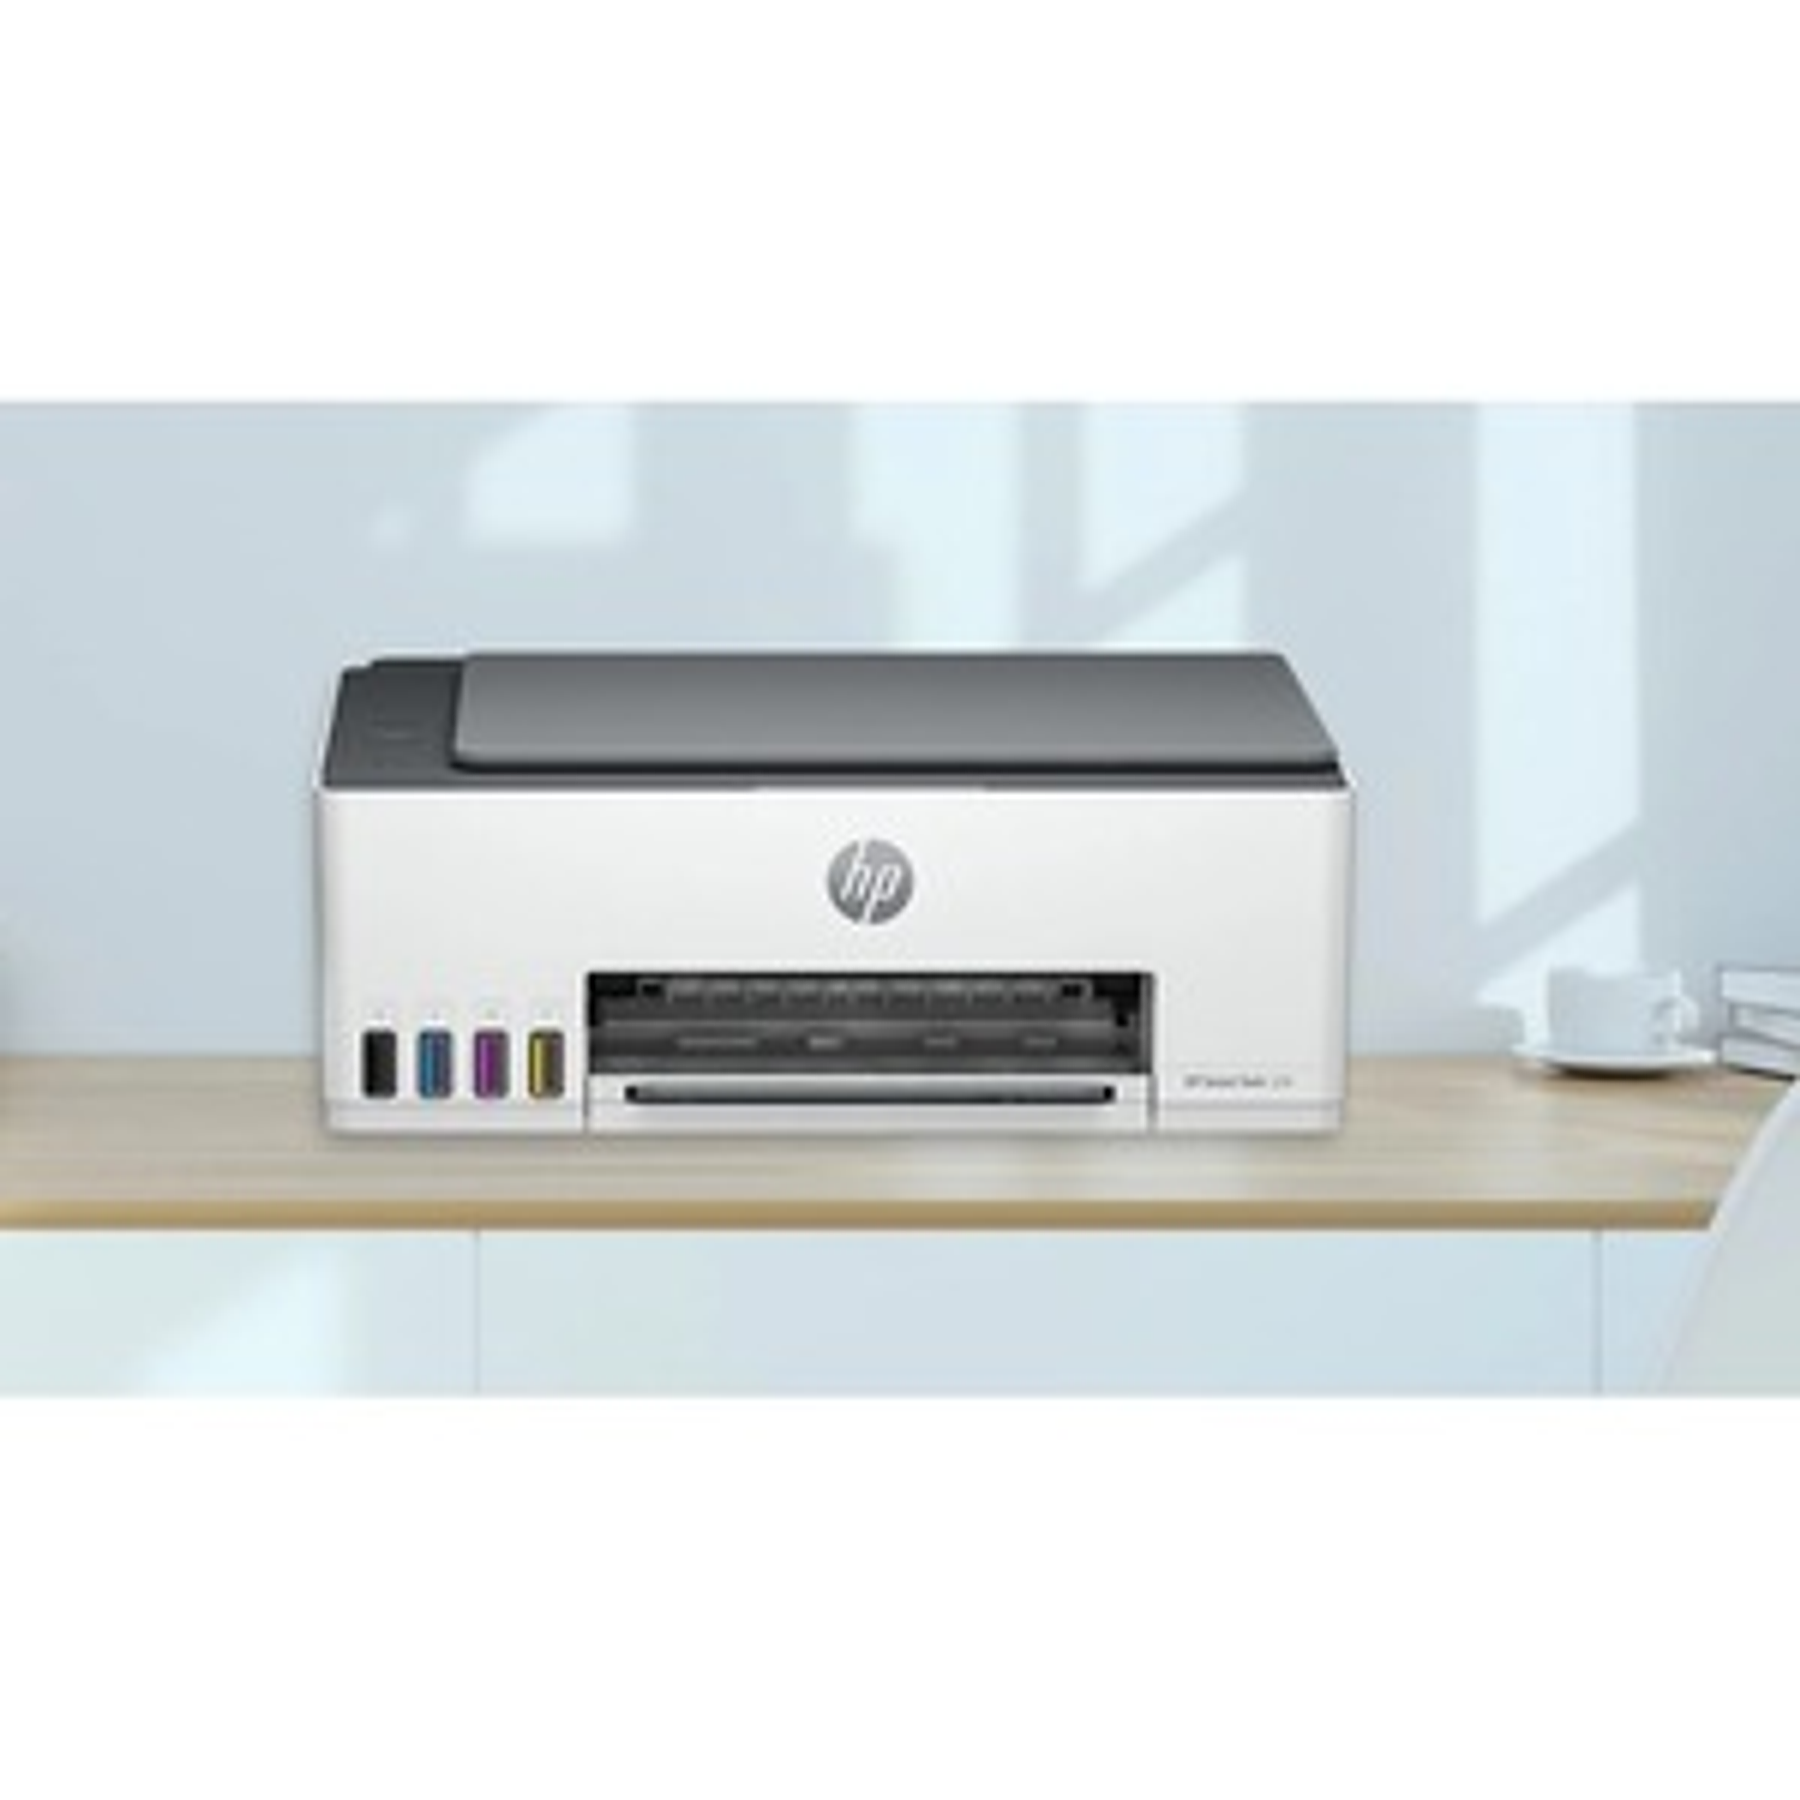 impresora multifuncion HP smart tank 520